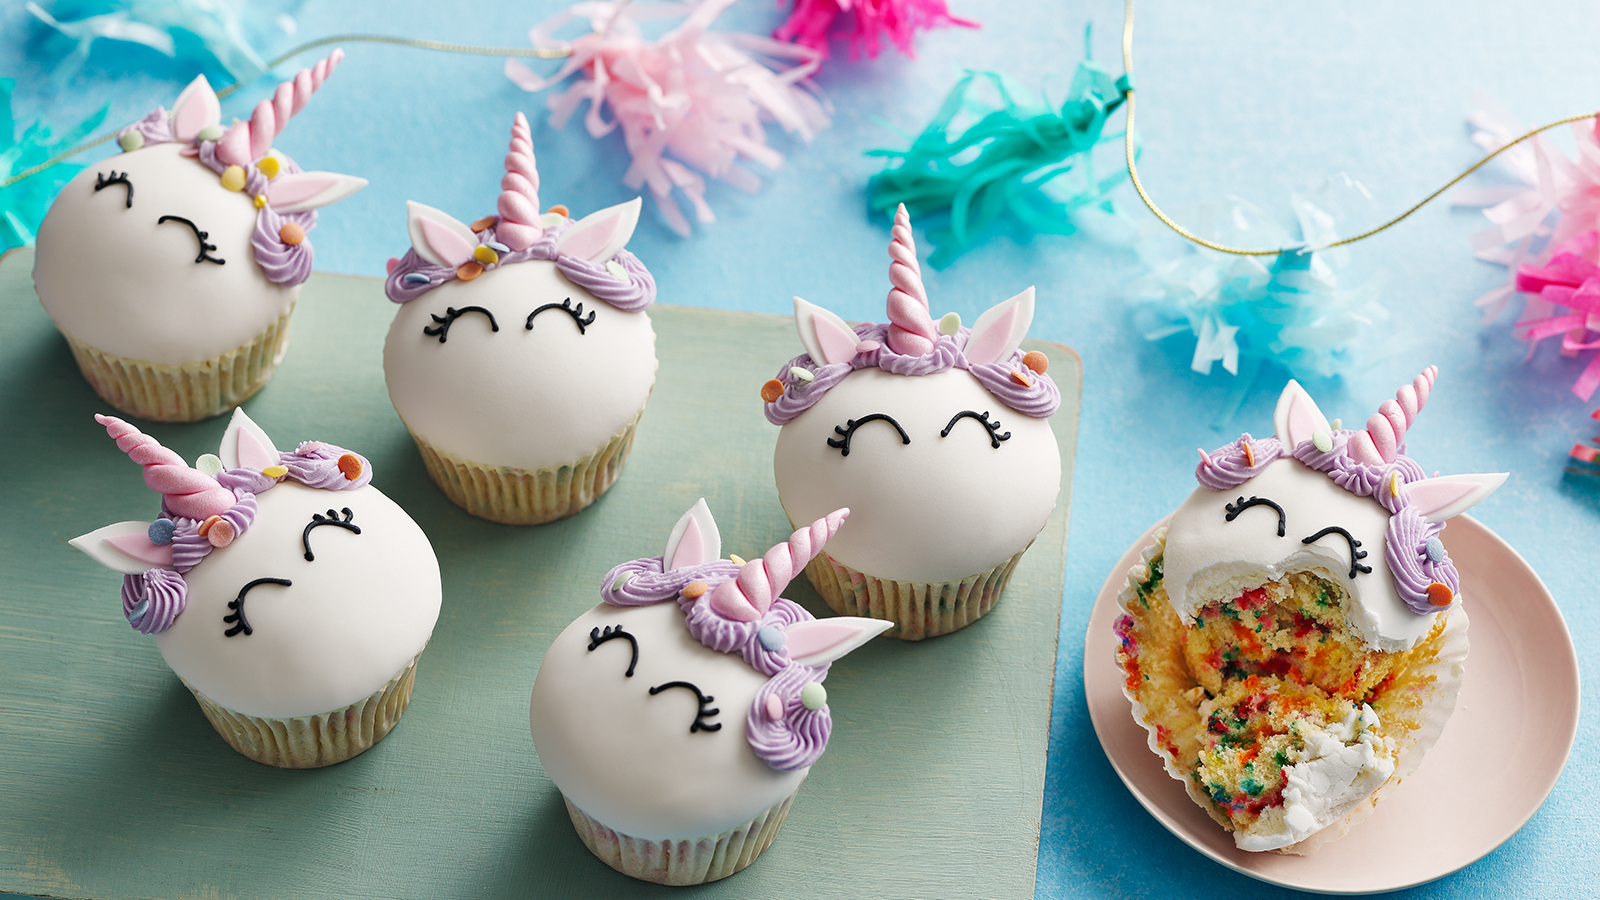 Rainbow unicorn cake & cupcakes for birthday - Cake #116. | Cupcake cakes,  Birthday cupcakes, Rainbow unicorn cake